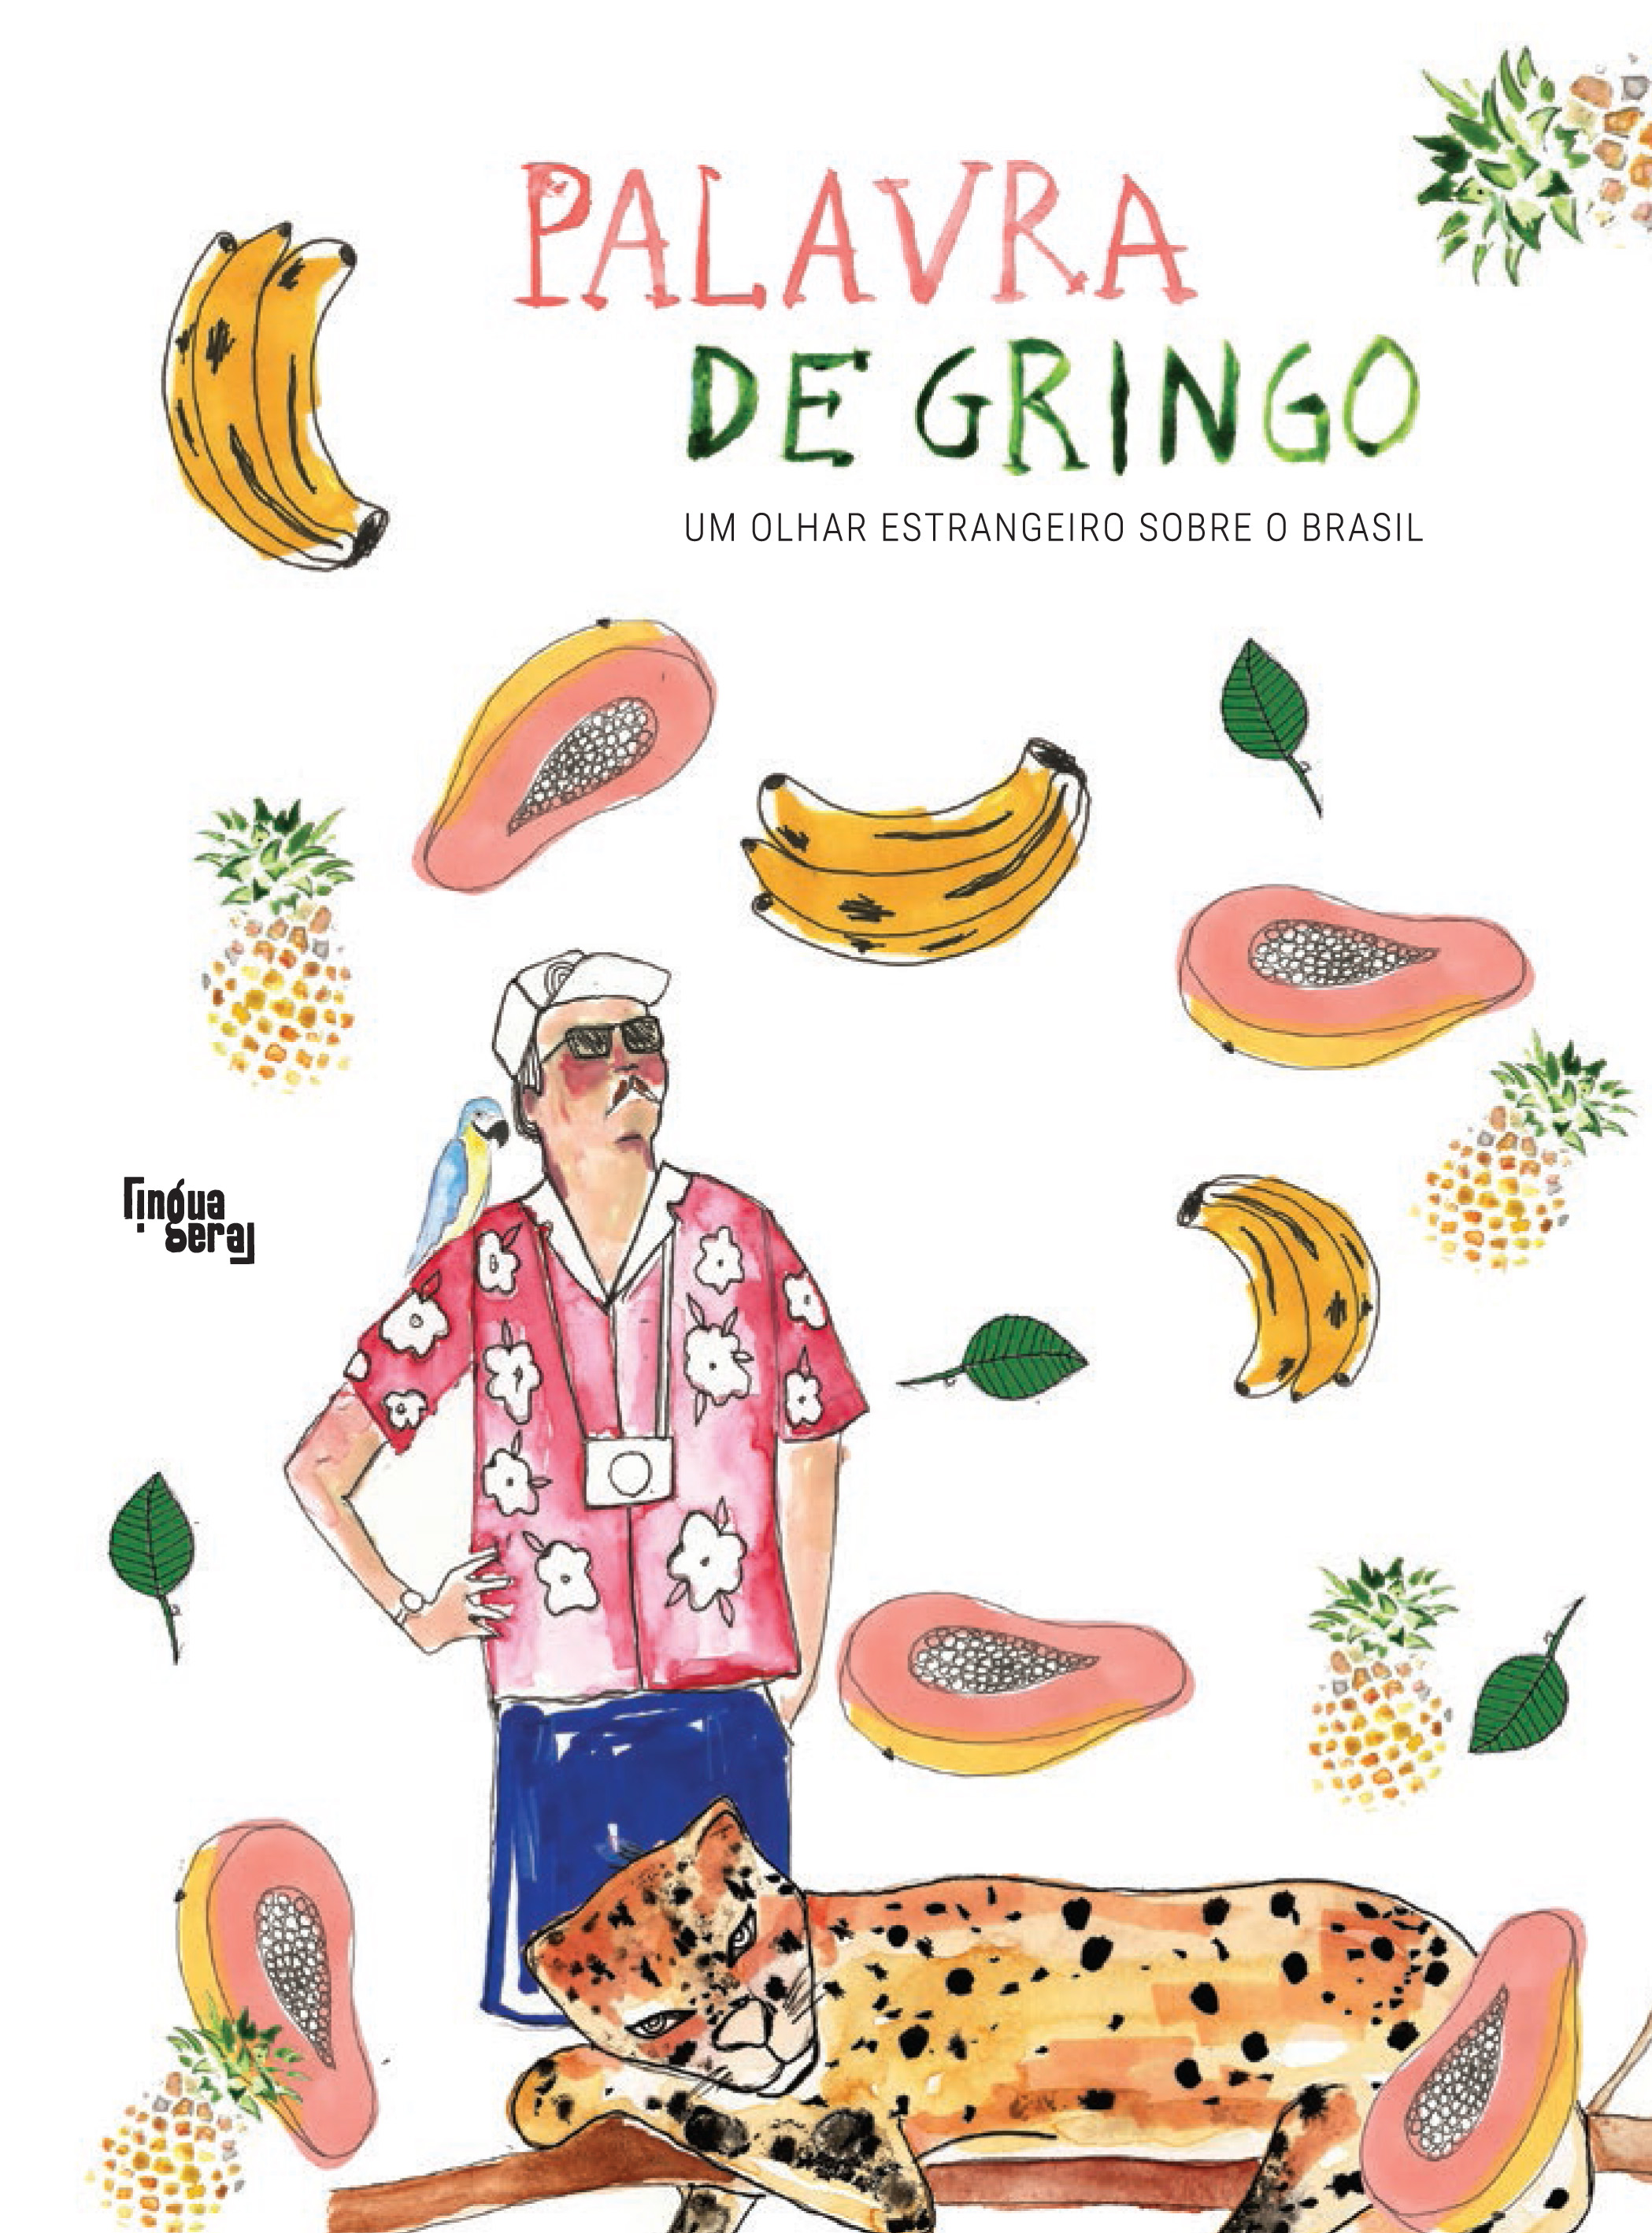 The “Palavra de Gringo” Book Launch Tonight in Ipanema